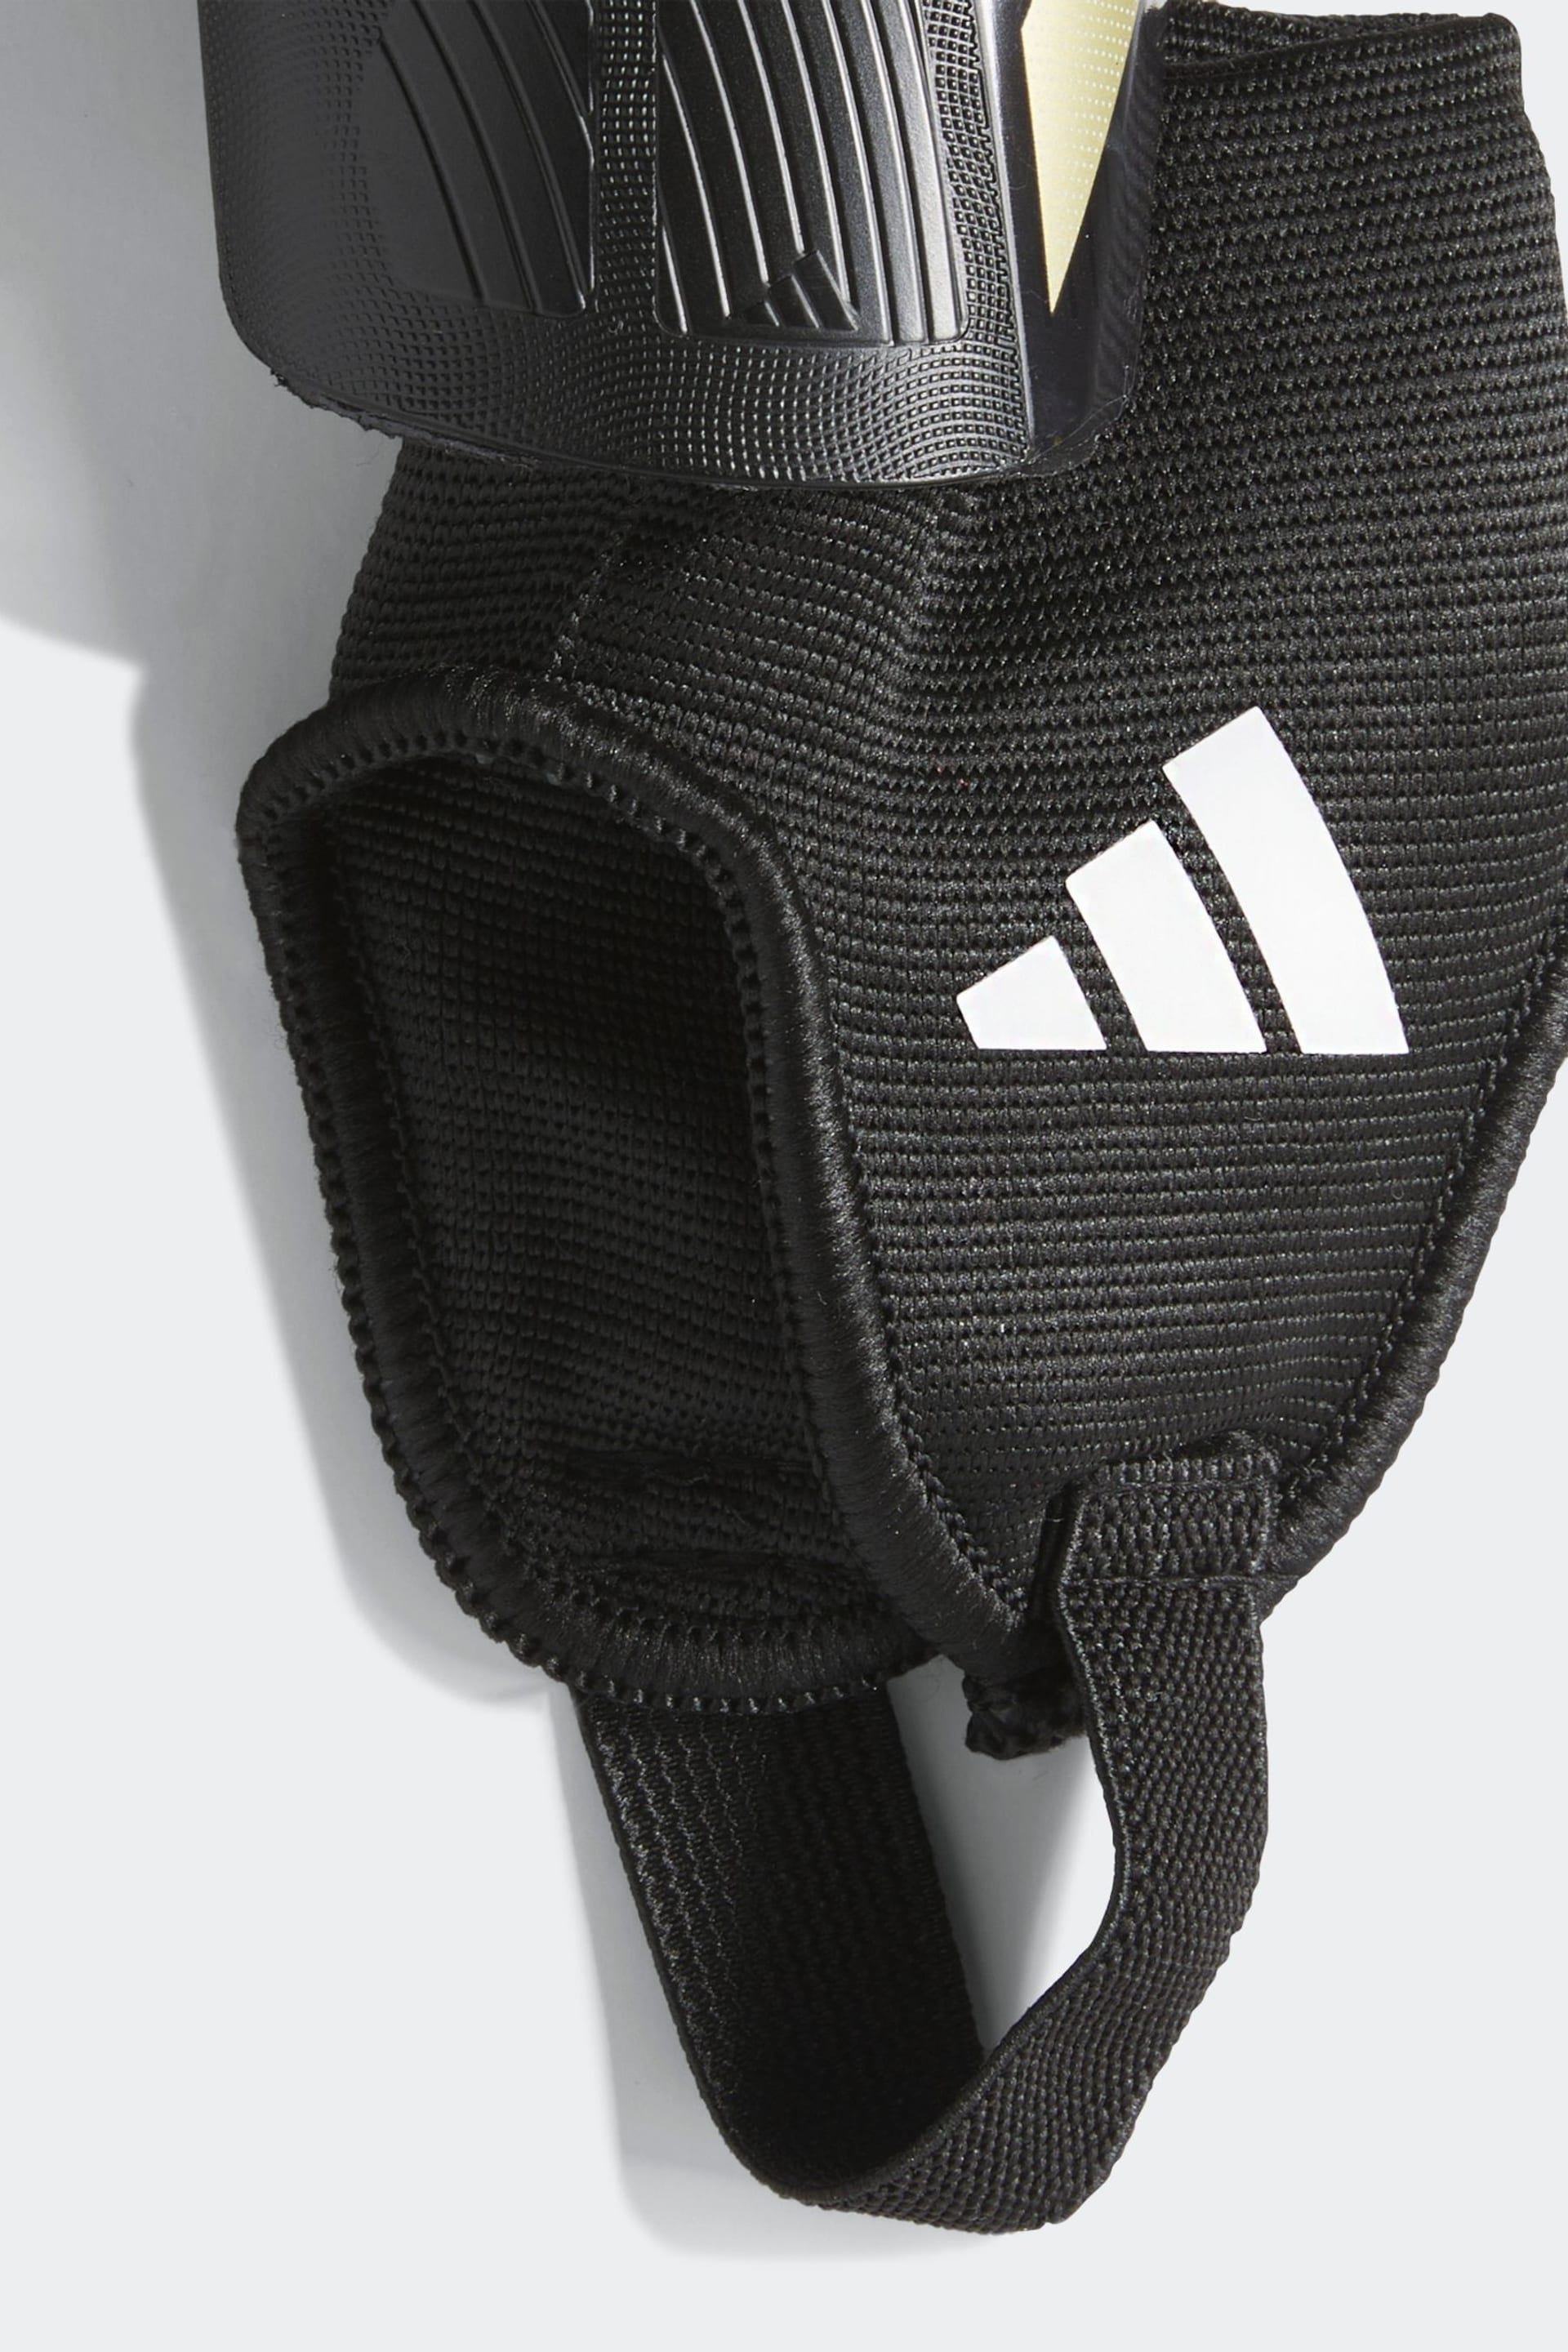 adidas Black/Gold Tiro Match Shin Guard - Image 4 of 4